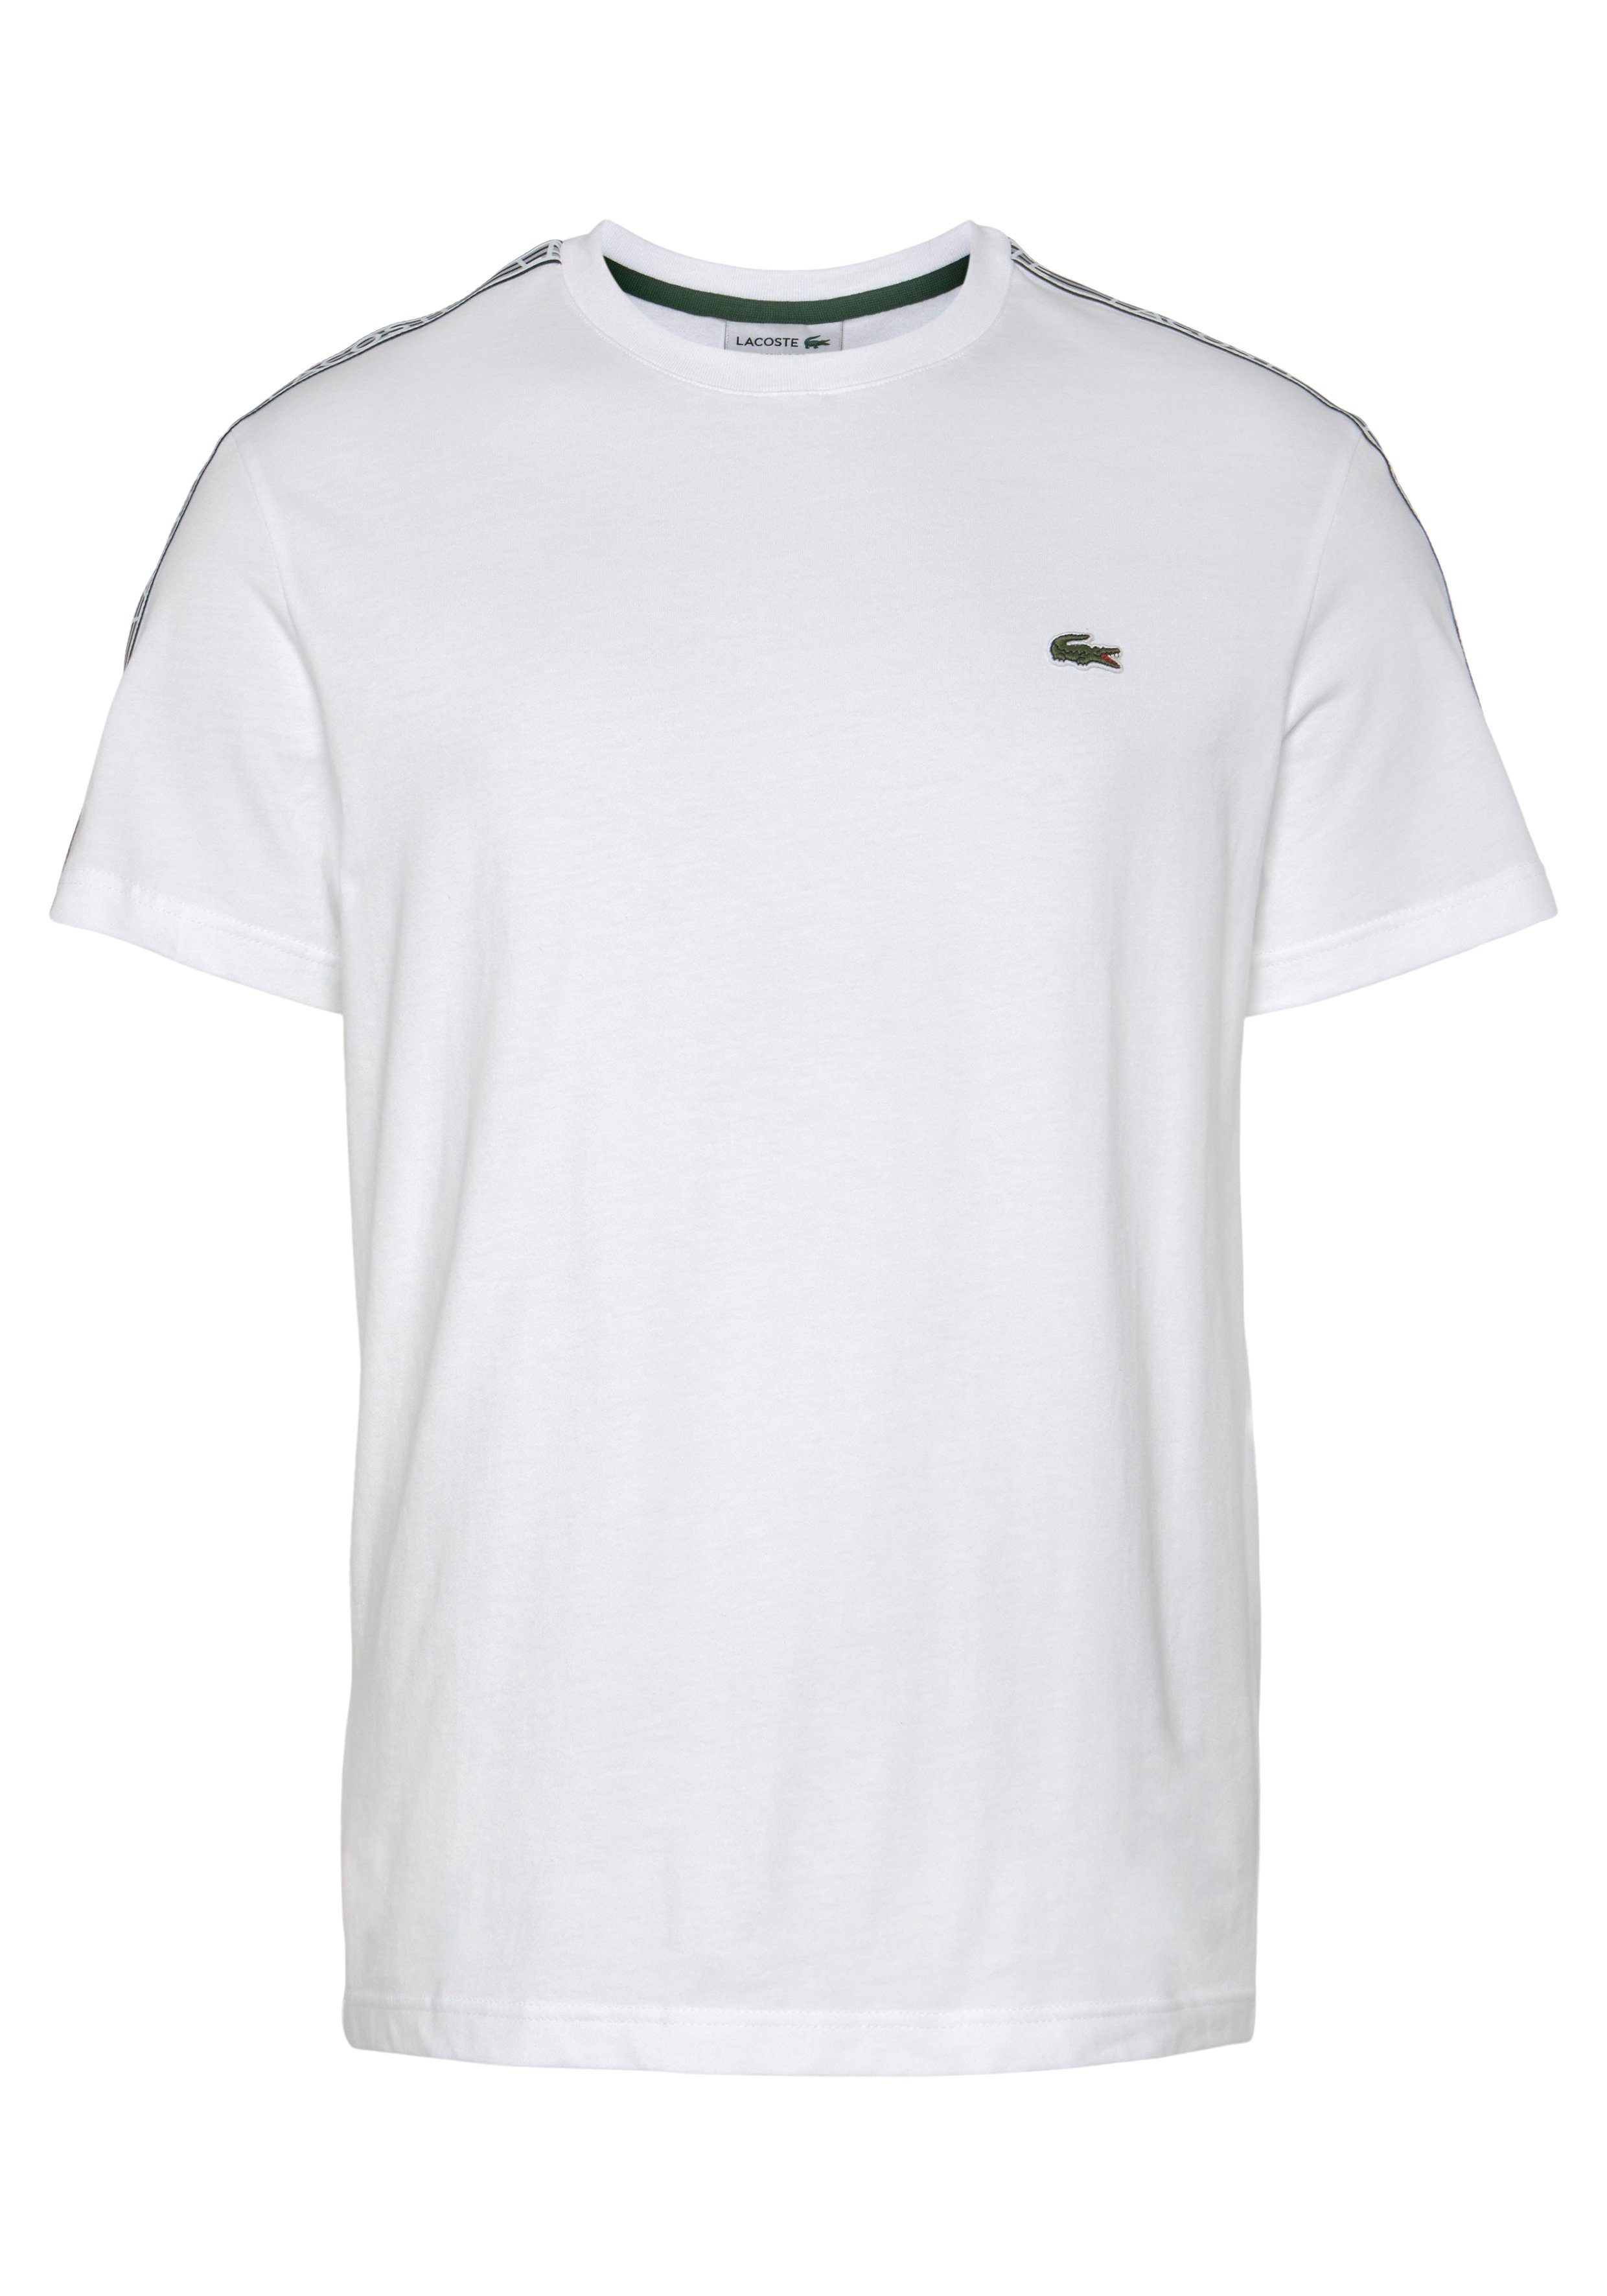 Lacoste T-Shirt mit beschriftetem Kontrastband an den Schultern white | 